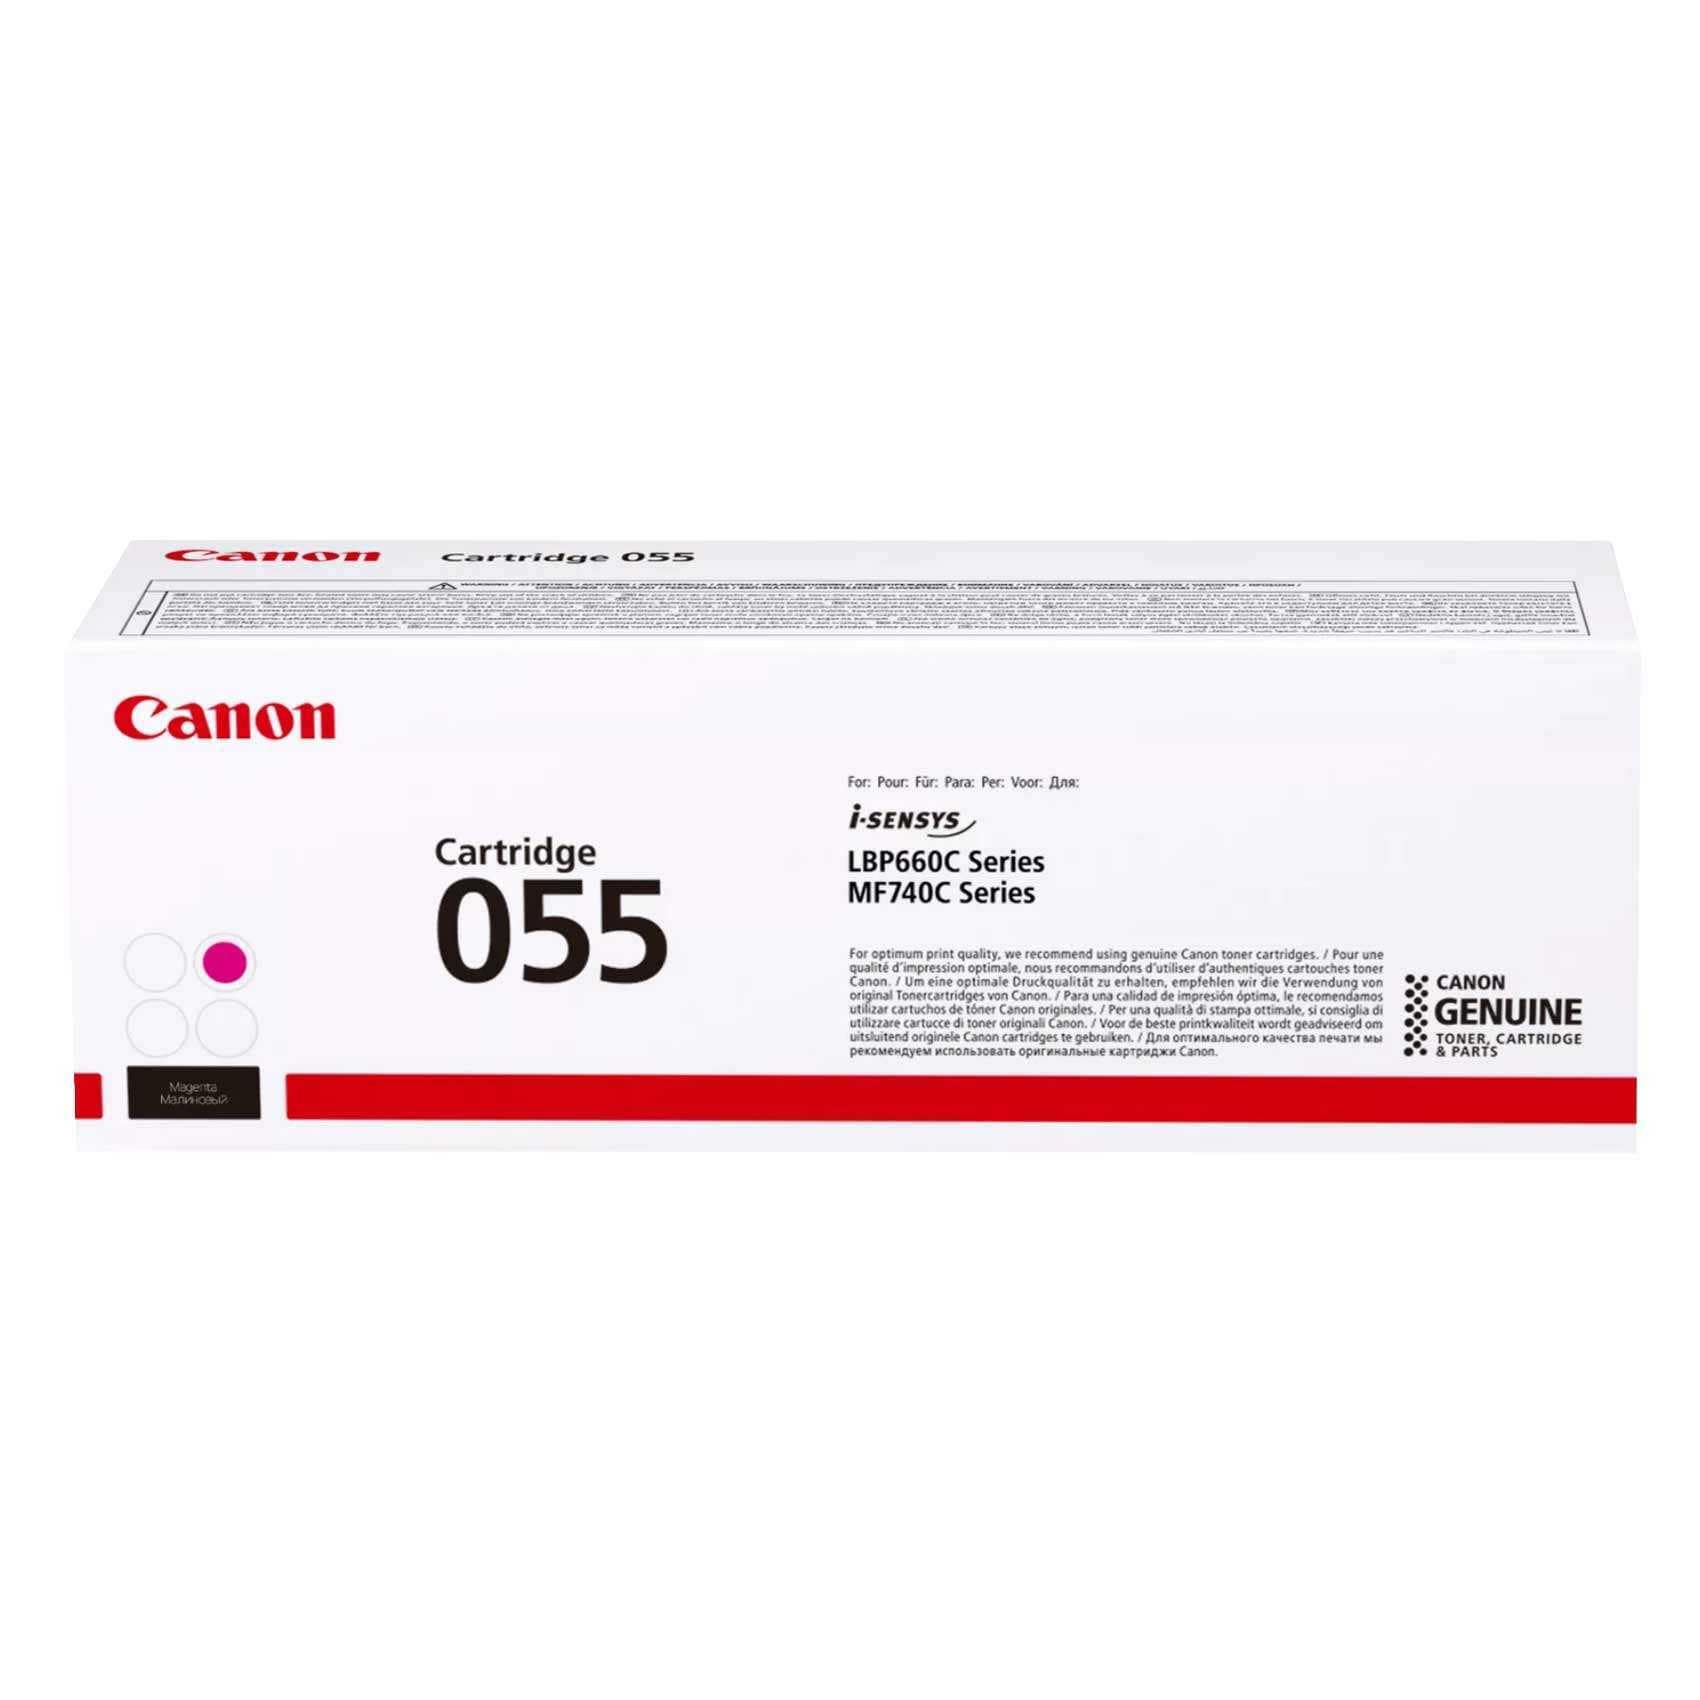 Canon 055 Toner Cartridge for i-Sensys LBP660 and MF740C Series